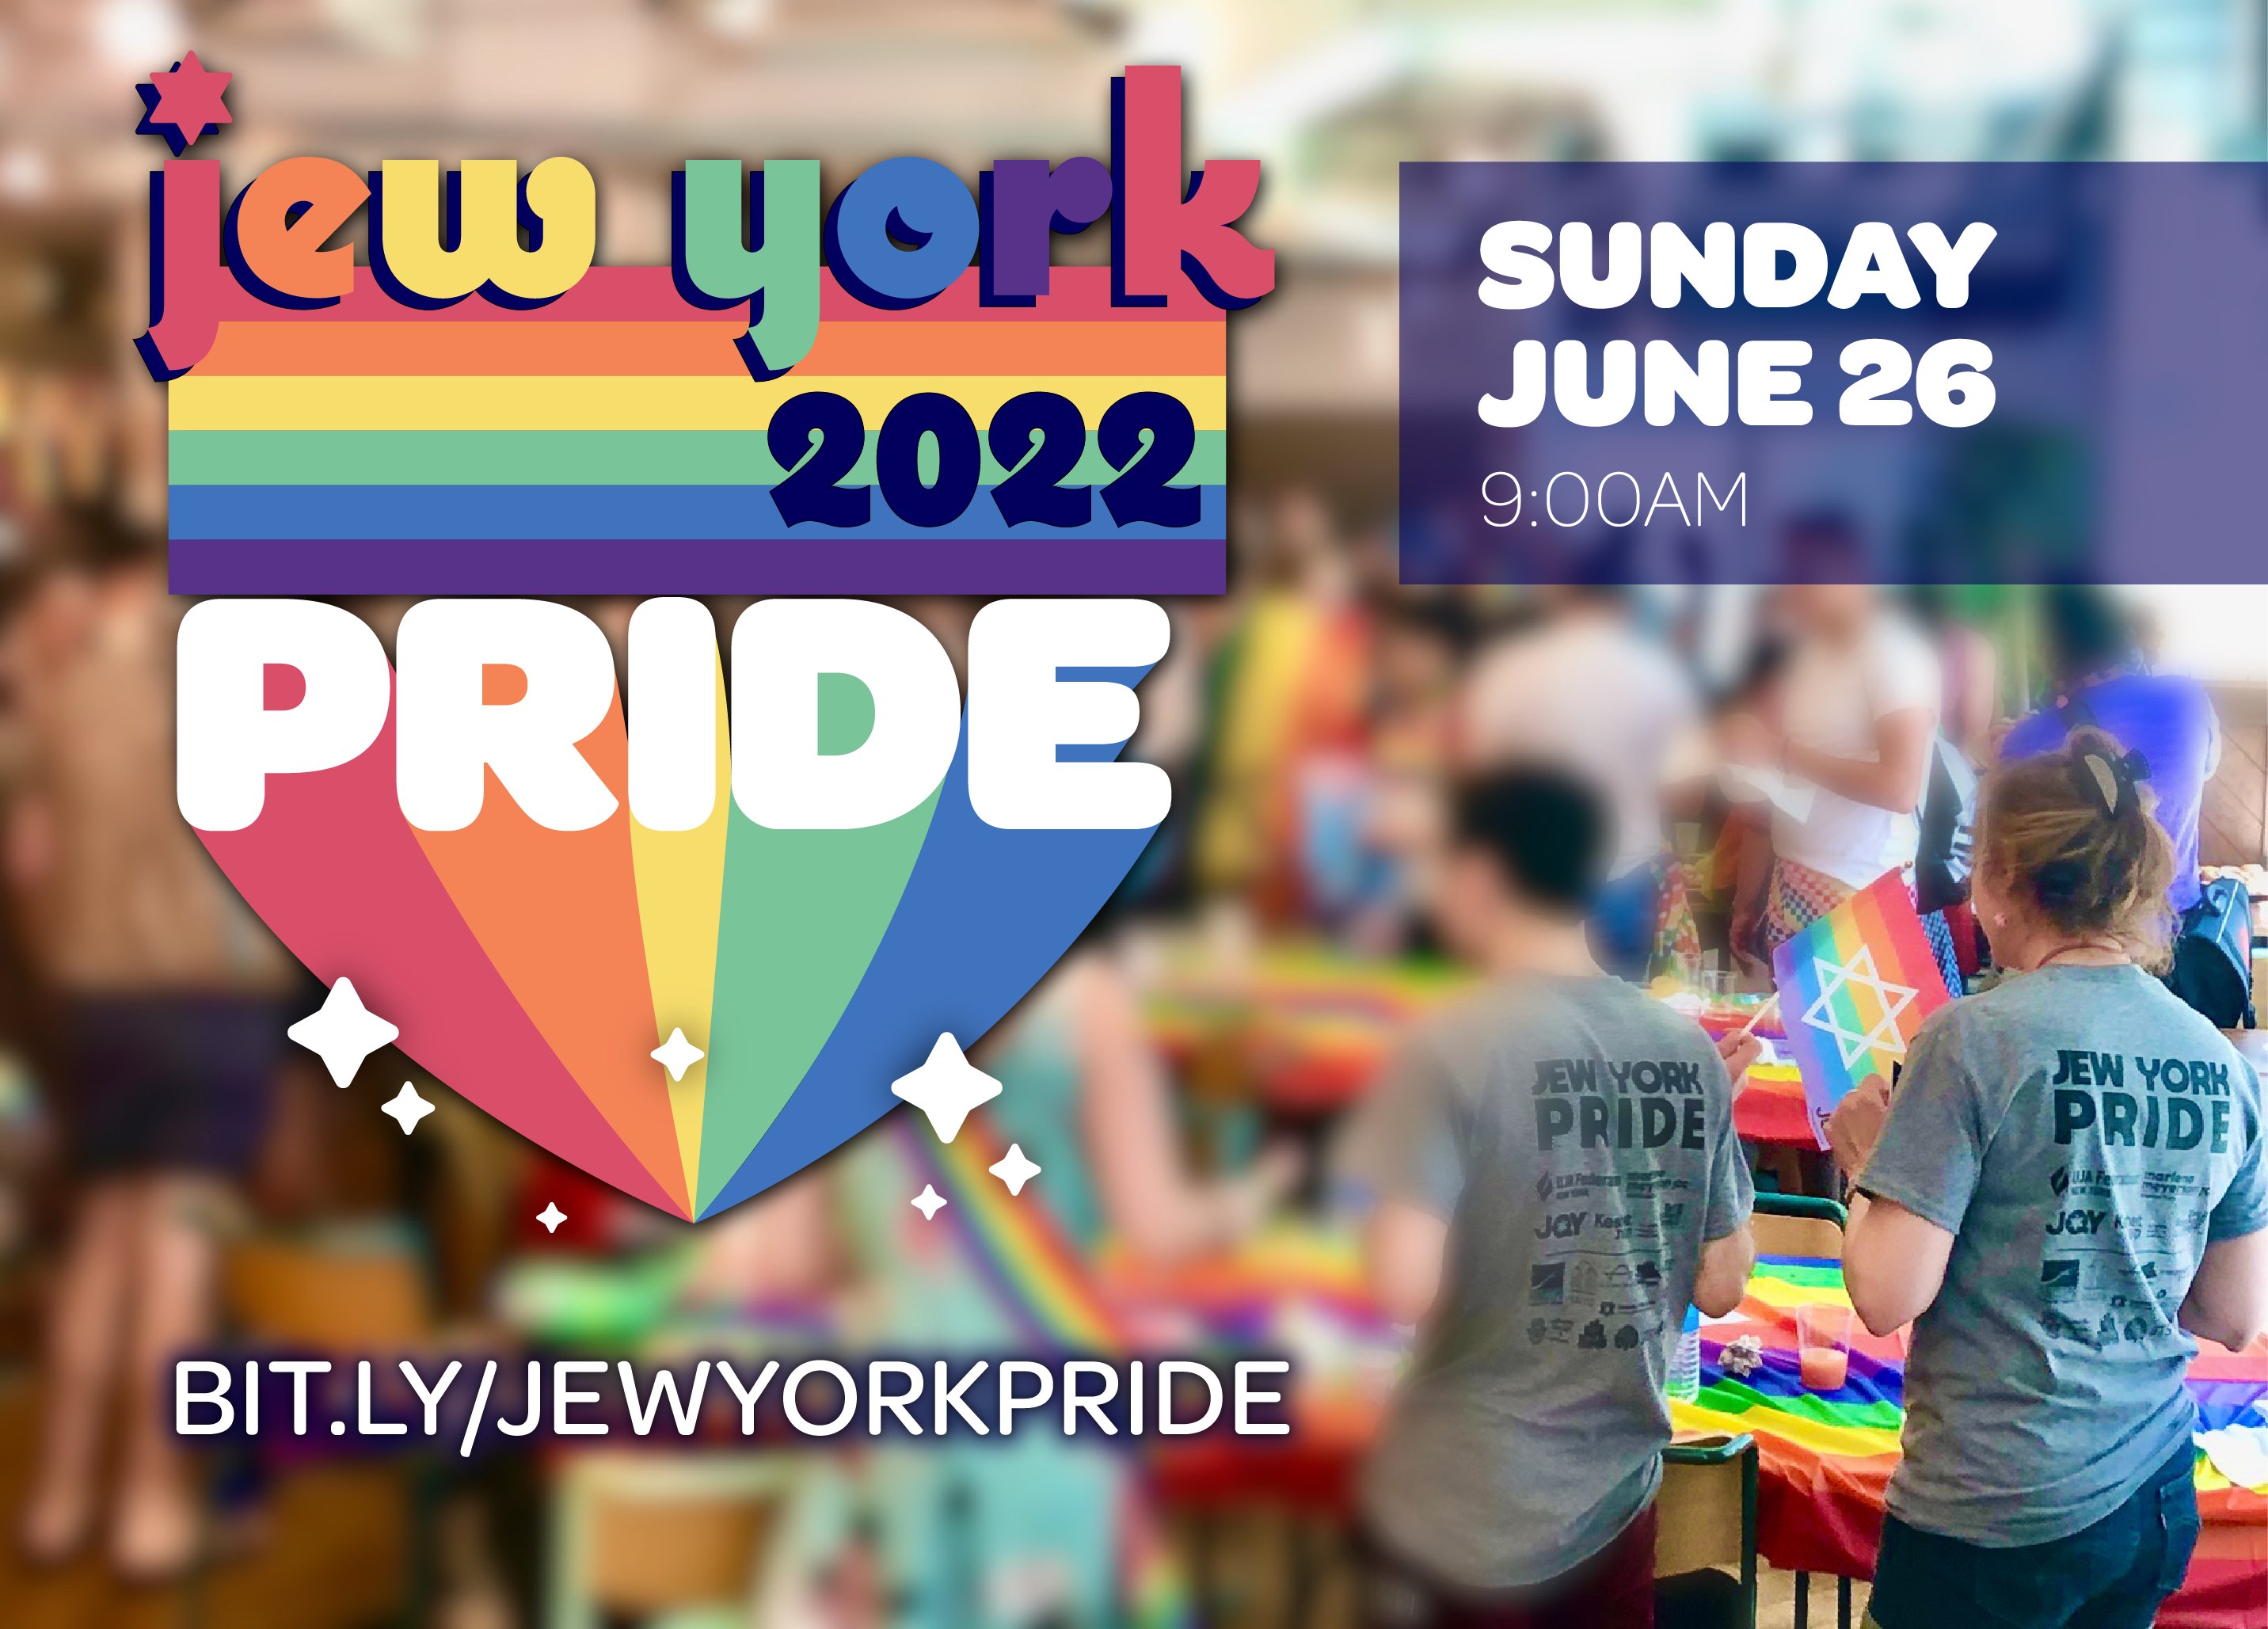 Jew York Pride 2022 Sunday, June 26, 9:00 am BIT.LY/JEWYORKPRIDE